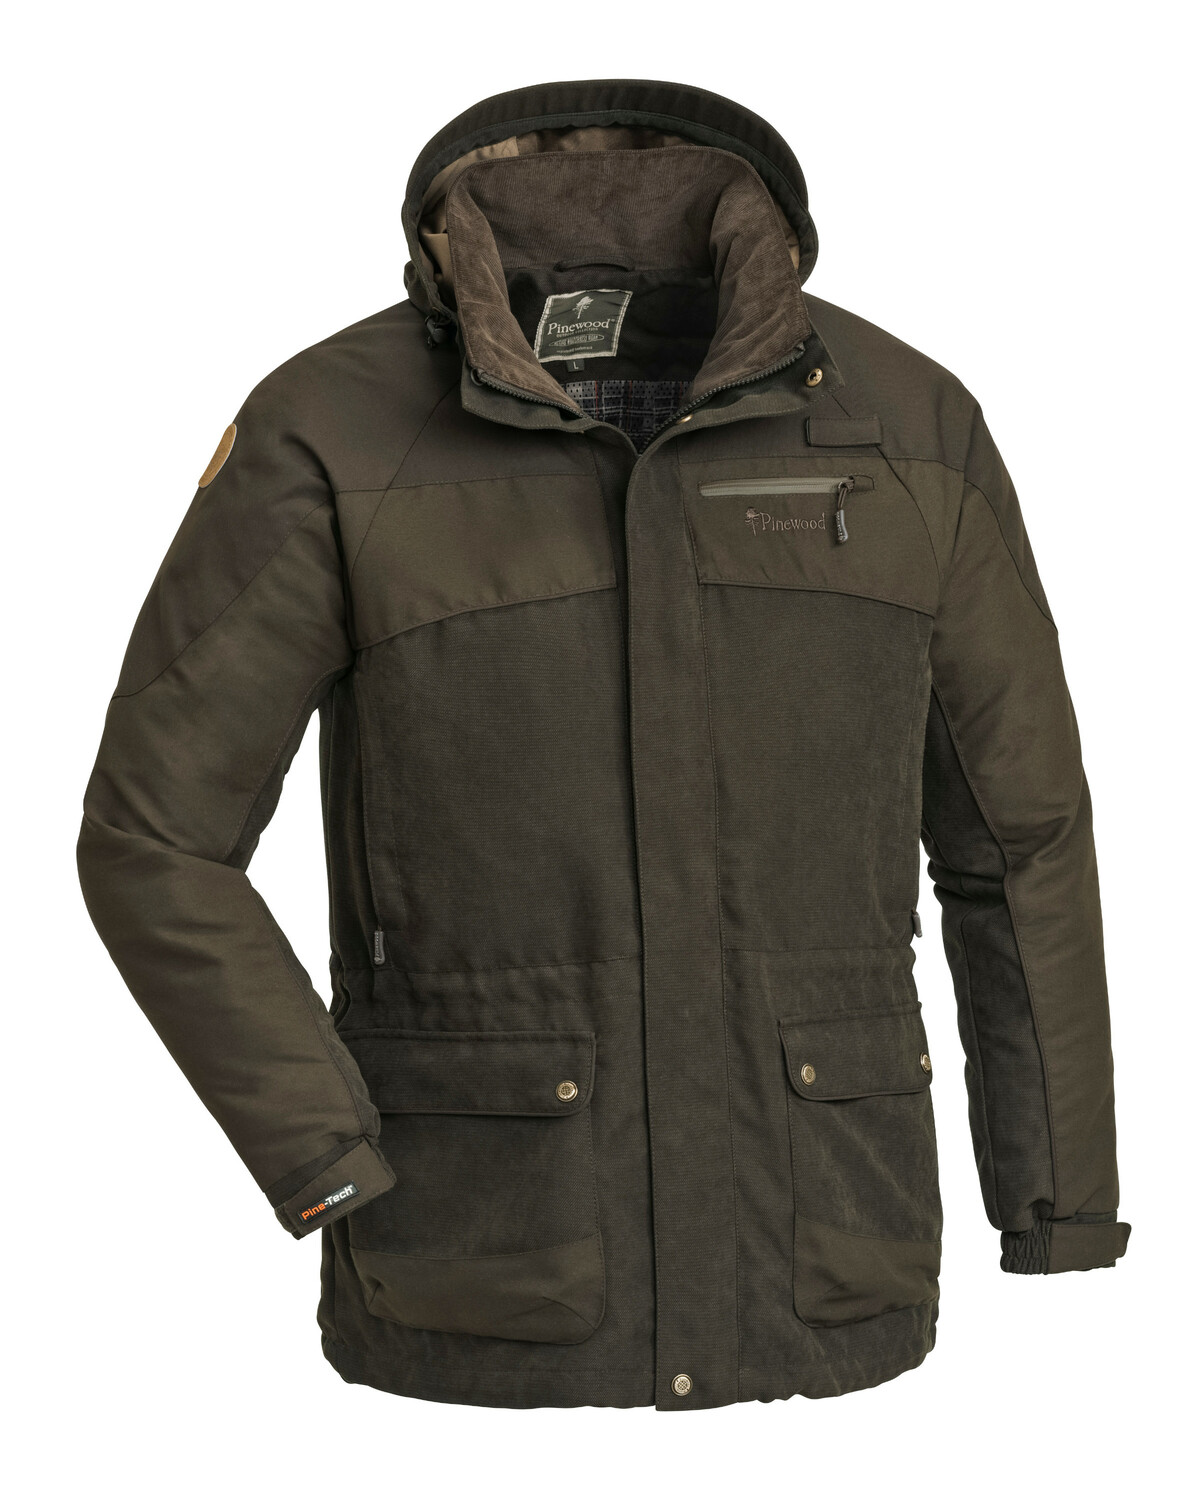 Охотничья куртка               Prestwick Exclusive  Pinewood 5801-722